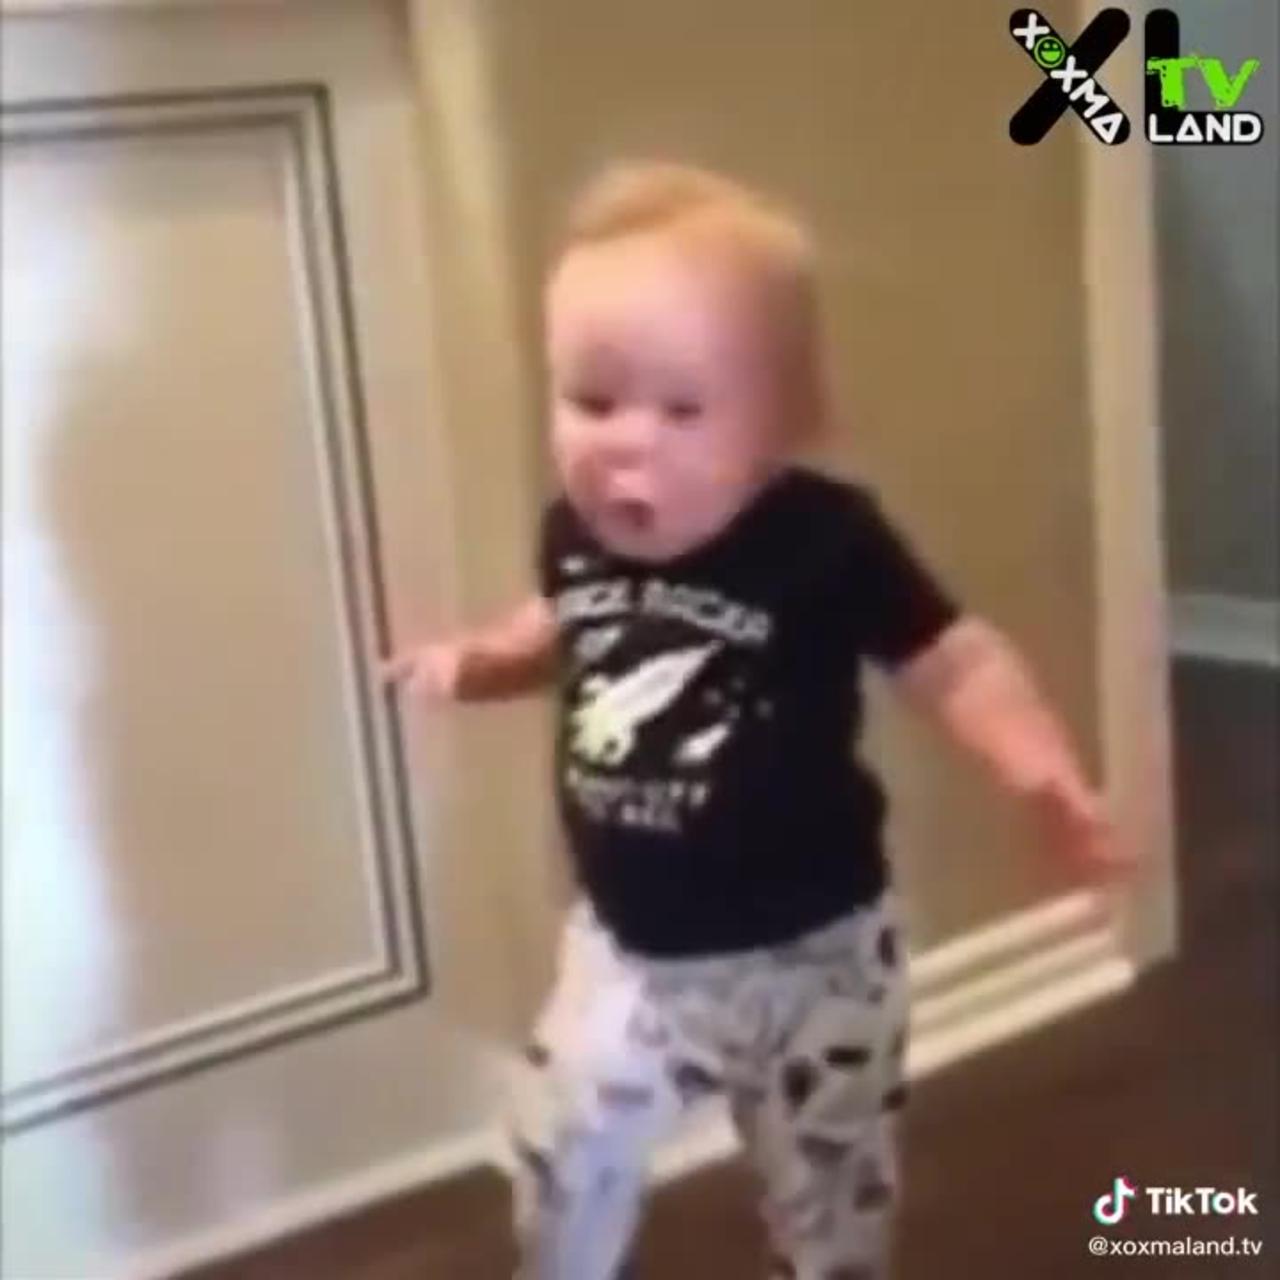 Baby Sneeze | Funny baby videos | cute babies